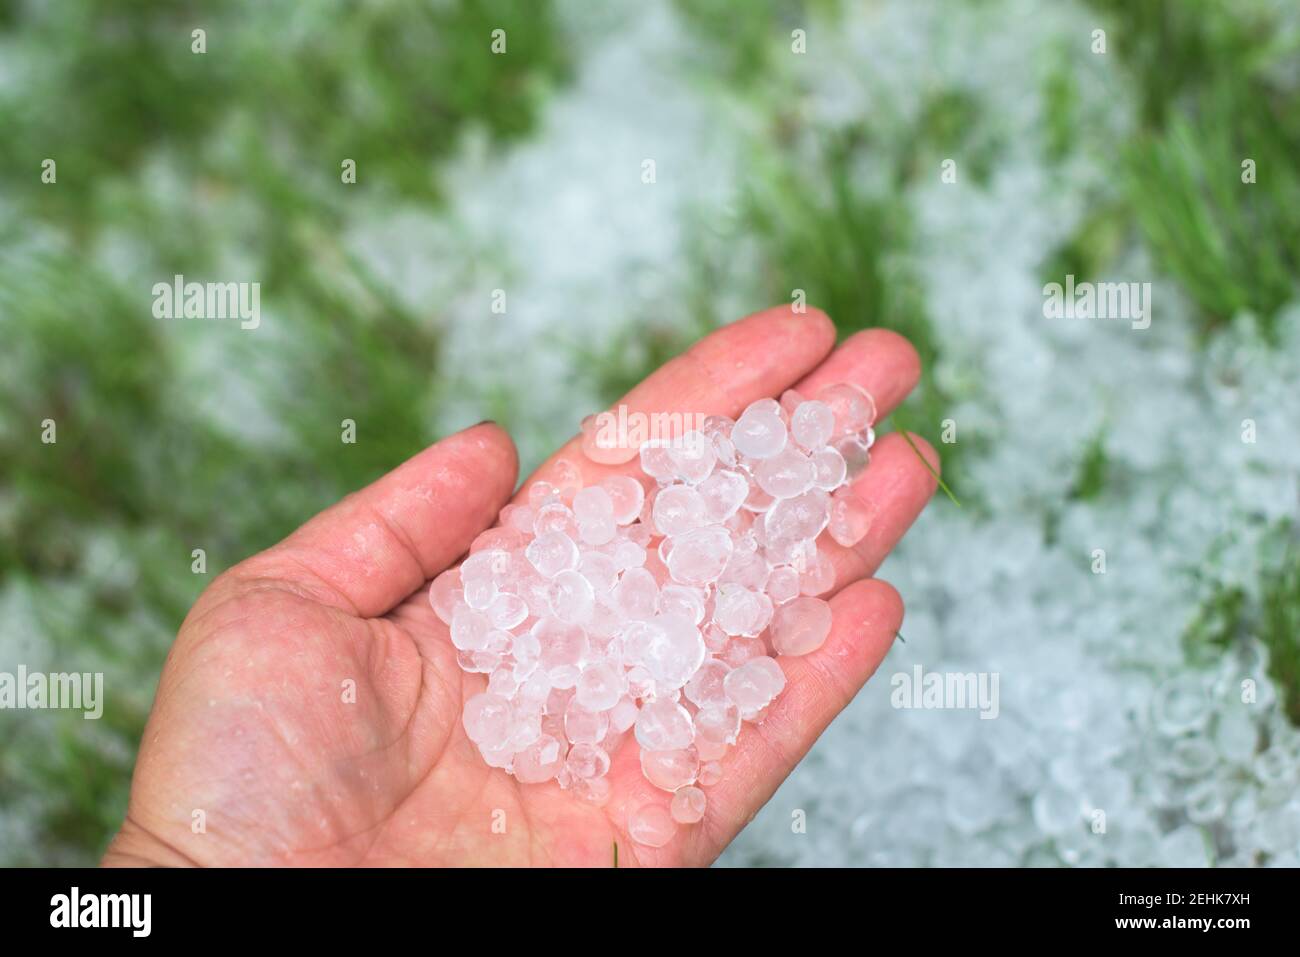 A human hand full of hailstones Stock Photo